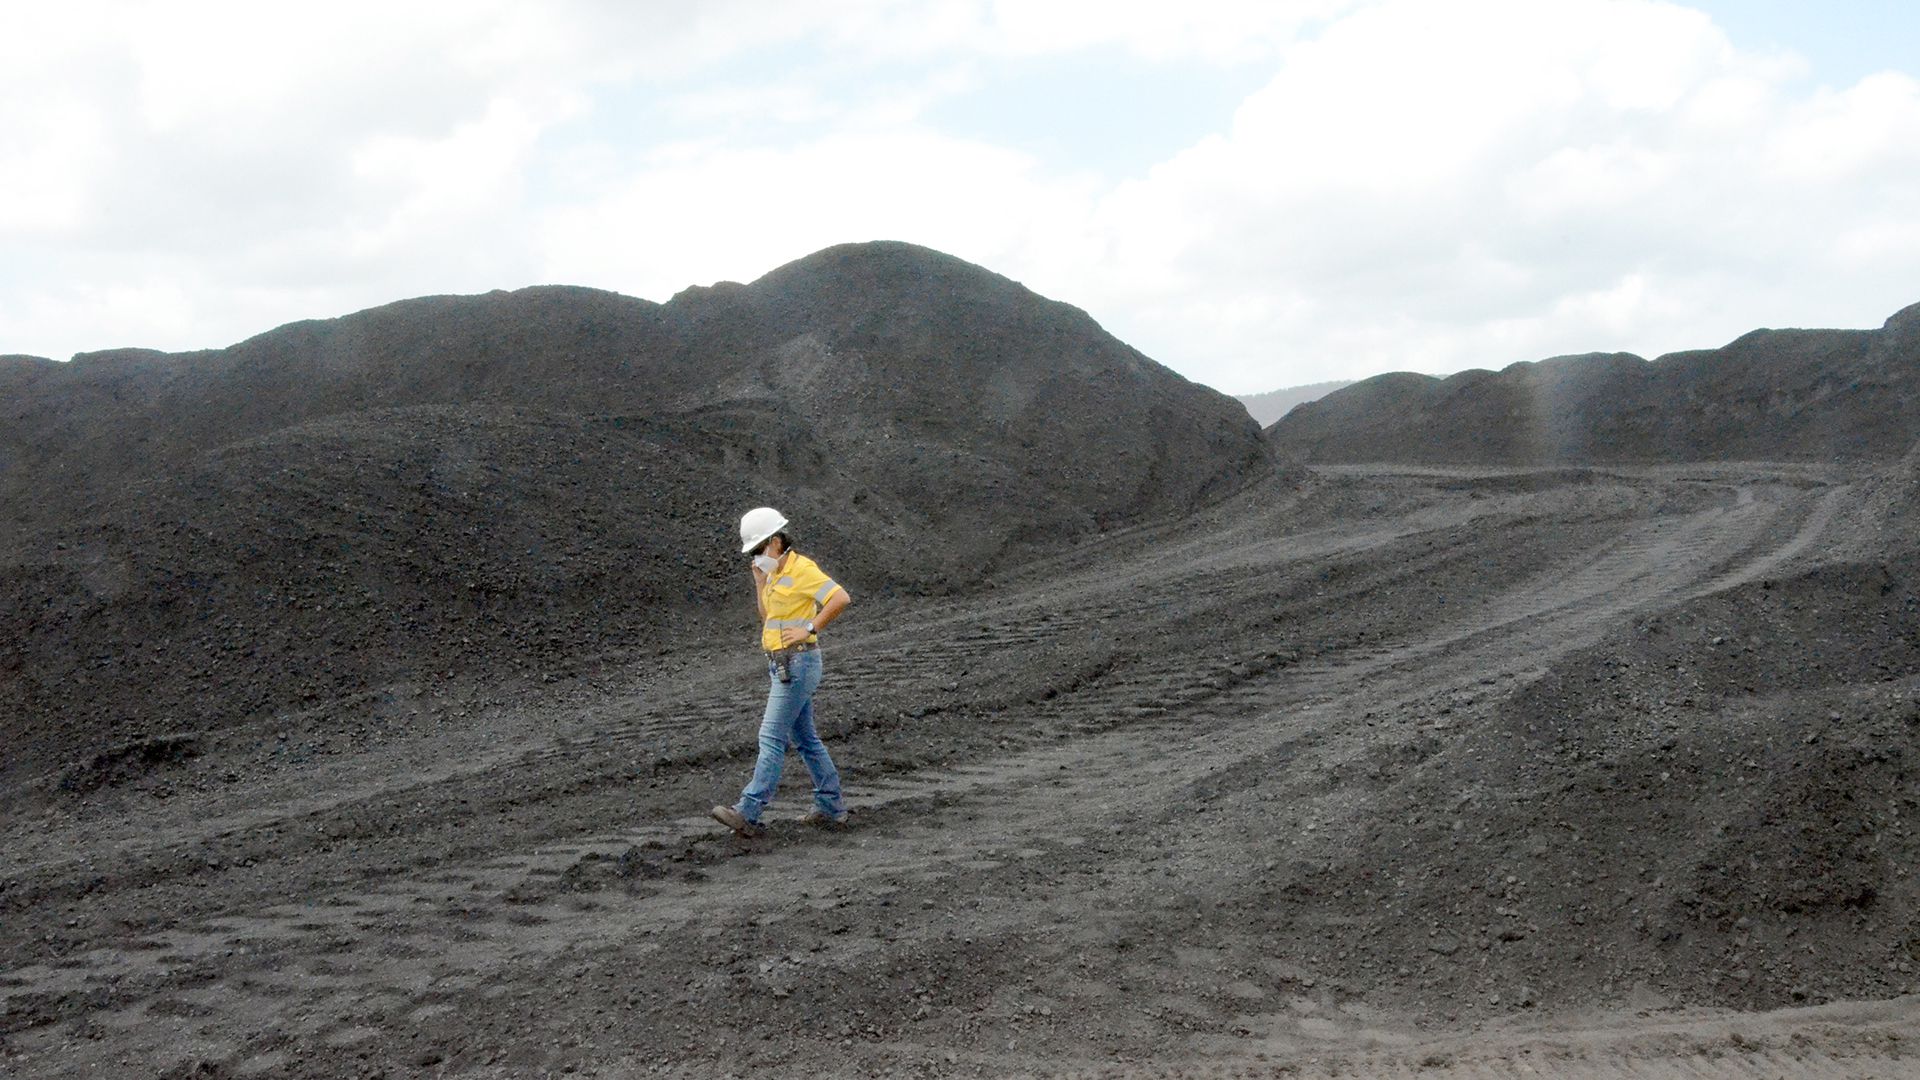 Grüne kritisieren Kohle aus Kolumbien als "koloniale Ausbeutung"